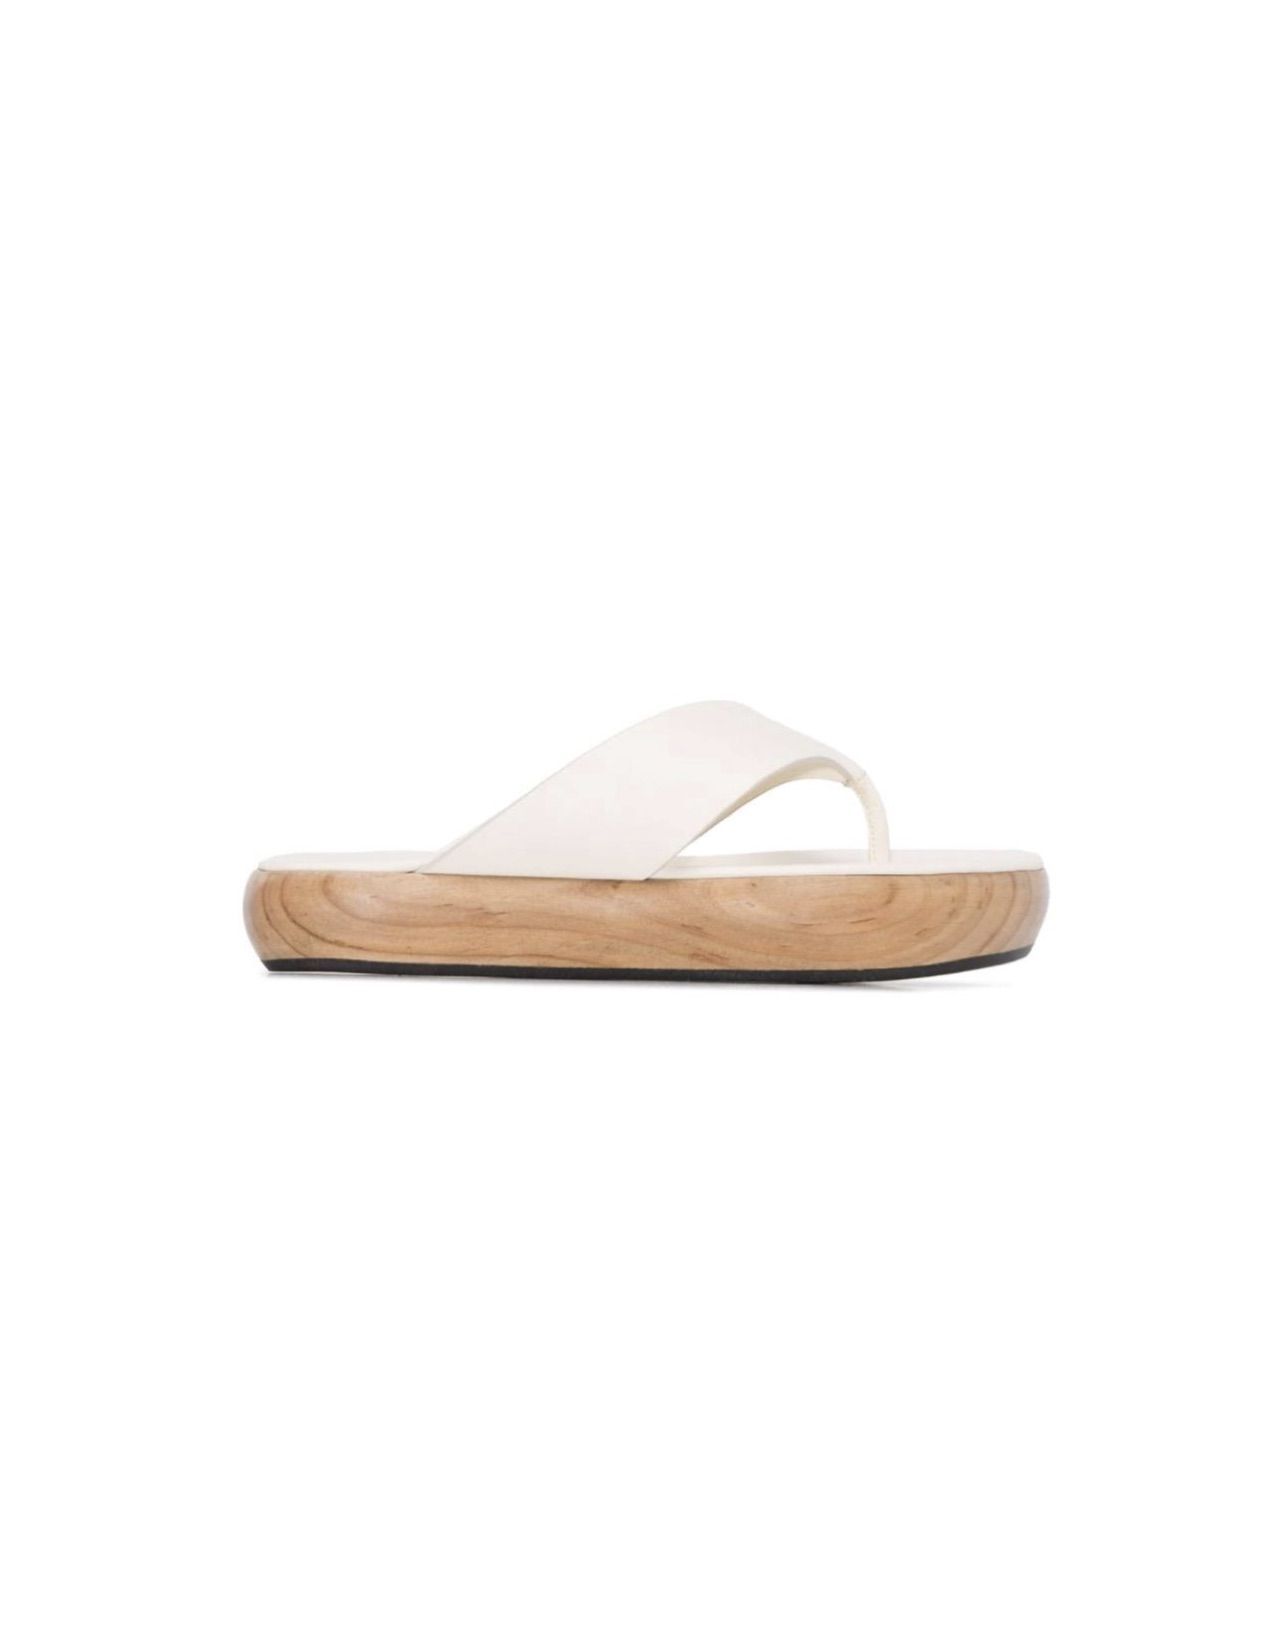 AIHOU Sandals for Women Clip Toe Platform Wedge Sandals Casual Summer Comfy Walking Slippers Flip Flops Flats Womens Sandals 